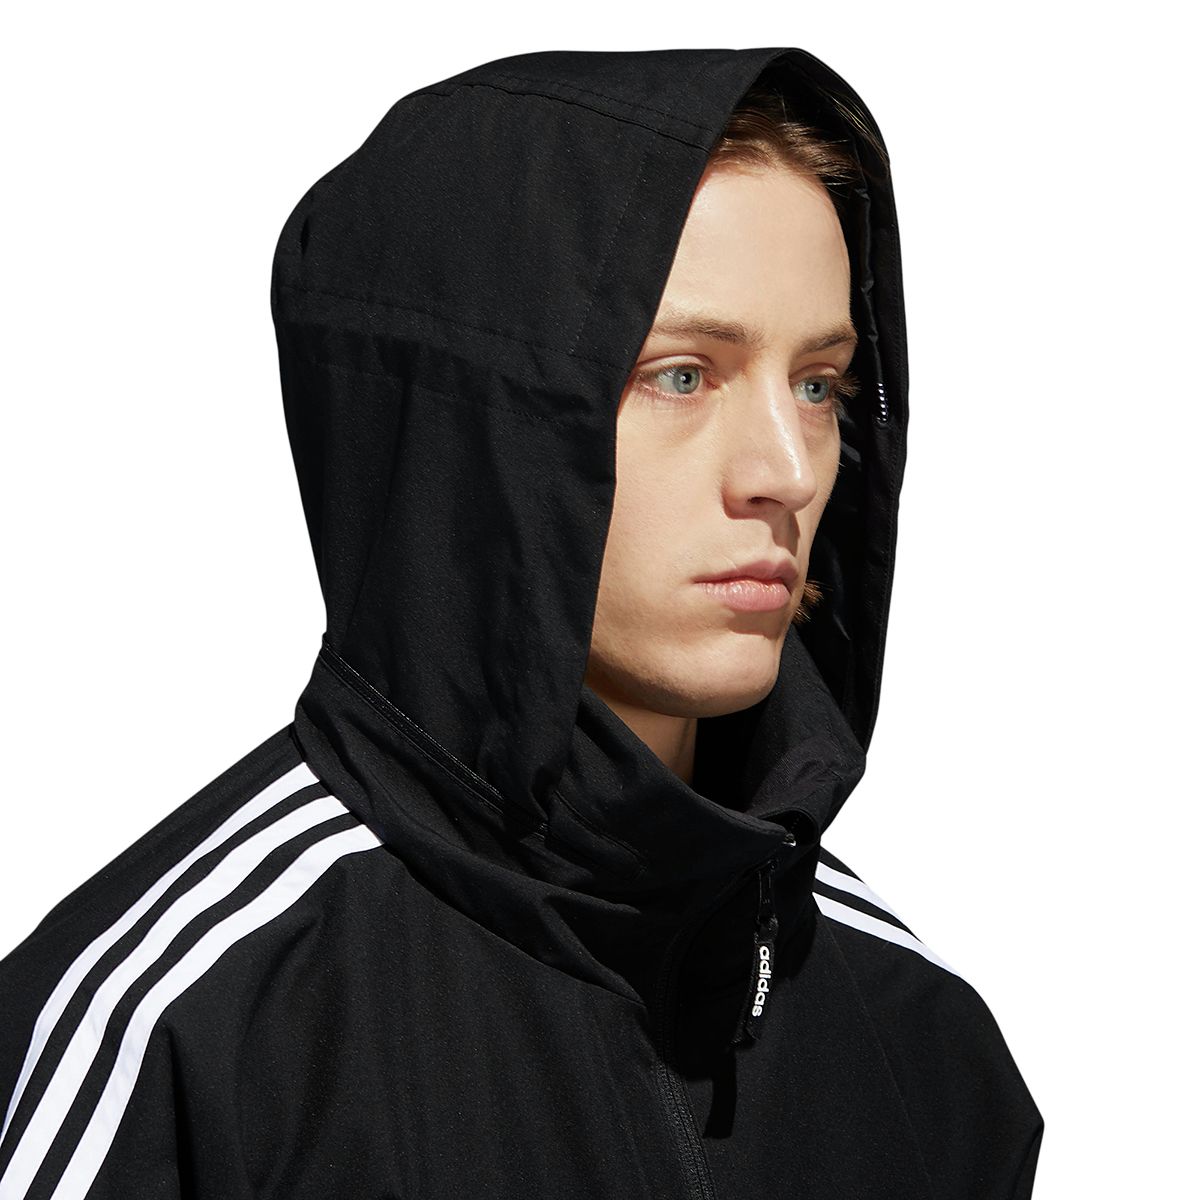 Adidas BB Snowbreaker Jacket - Men's - Clothing